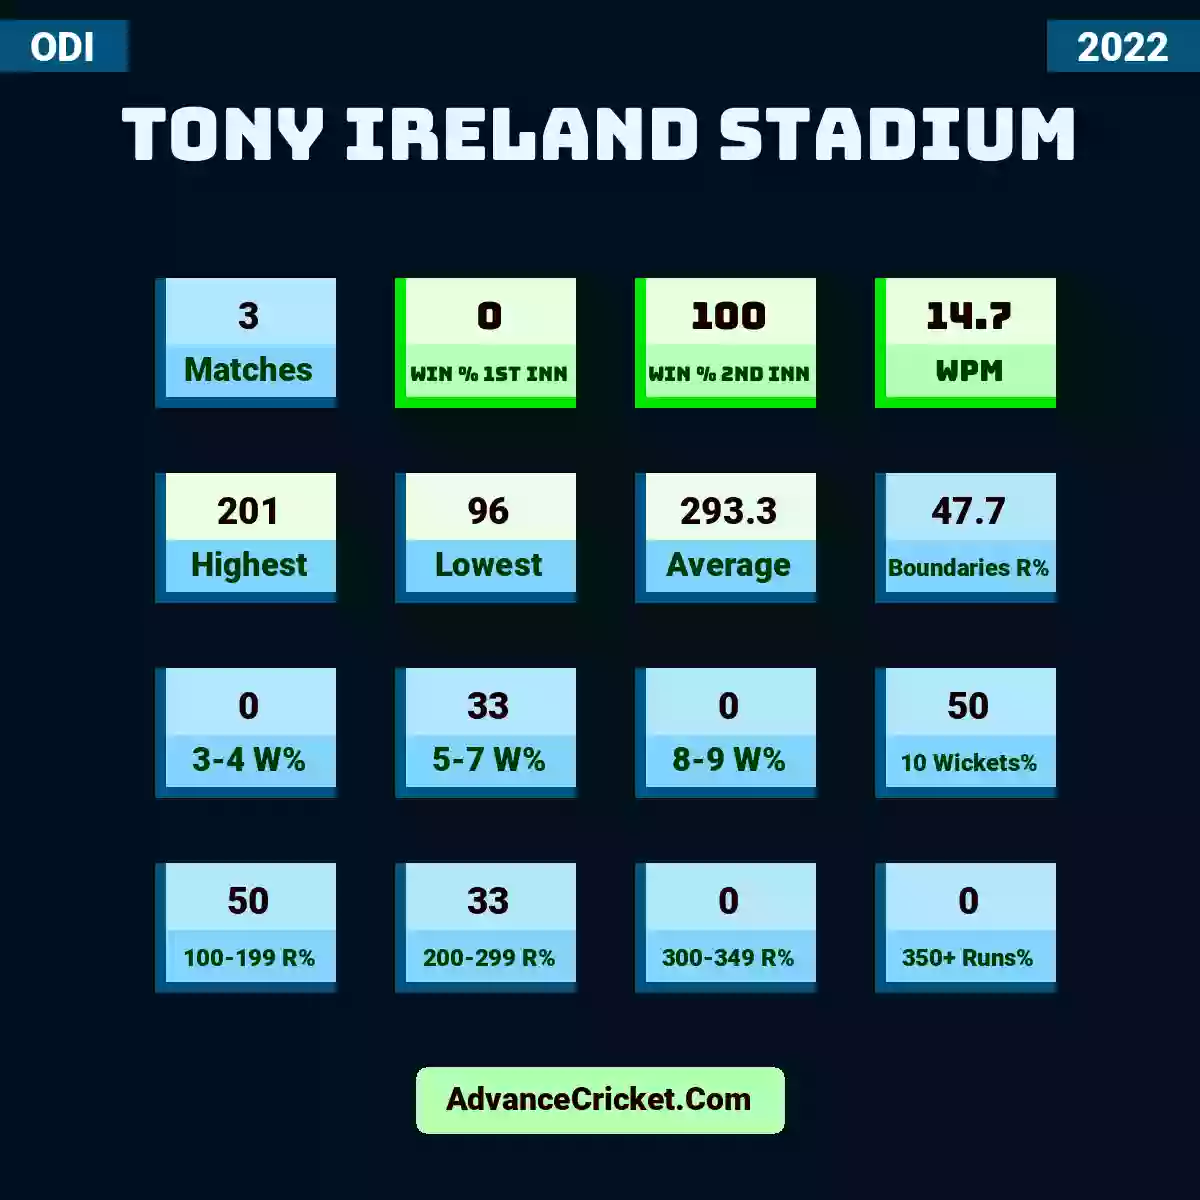 Image showing Tony Ireland Stadium with Matches: 3, Win % 1st Inn: 0, Win % 2nd Inn: 100, WPM: 14.7, Highest: 201, Lowest: 96, Average: 293.3, Boundaries R%: 47.7, 3-4 W%: 0, 5-7 W%: 33, 8-9 W%: 0, 10 Wickets%: 50, 100-199 R%: 50, 200-299 R%: 33, 300-349 R%: 0, 350+ Runs%: 0.